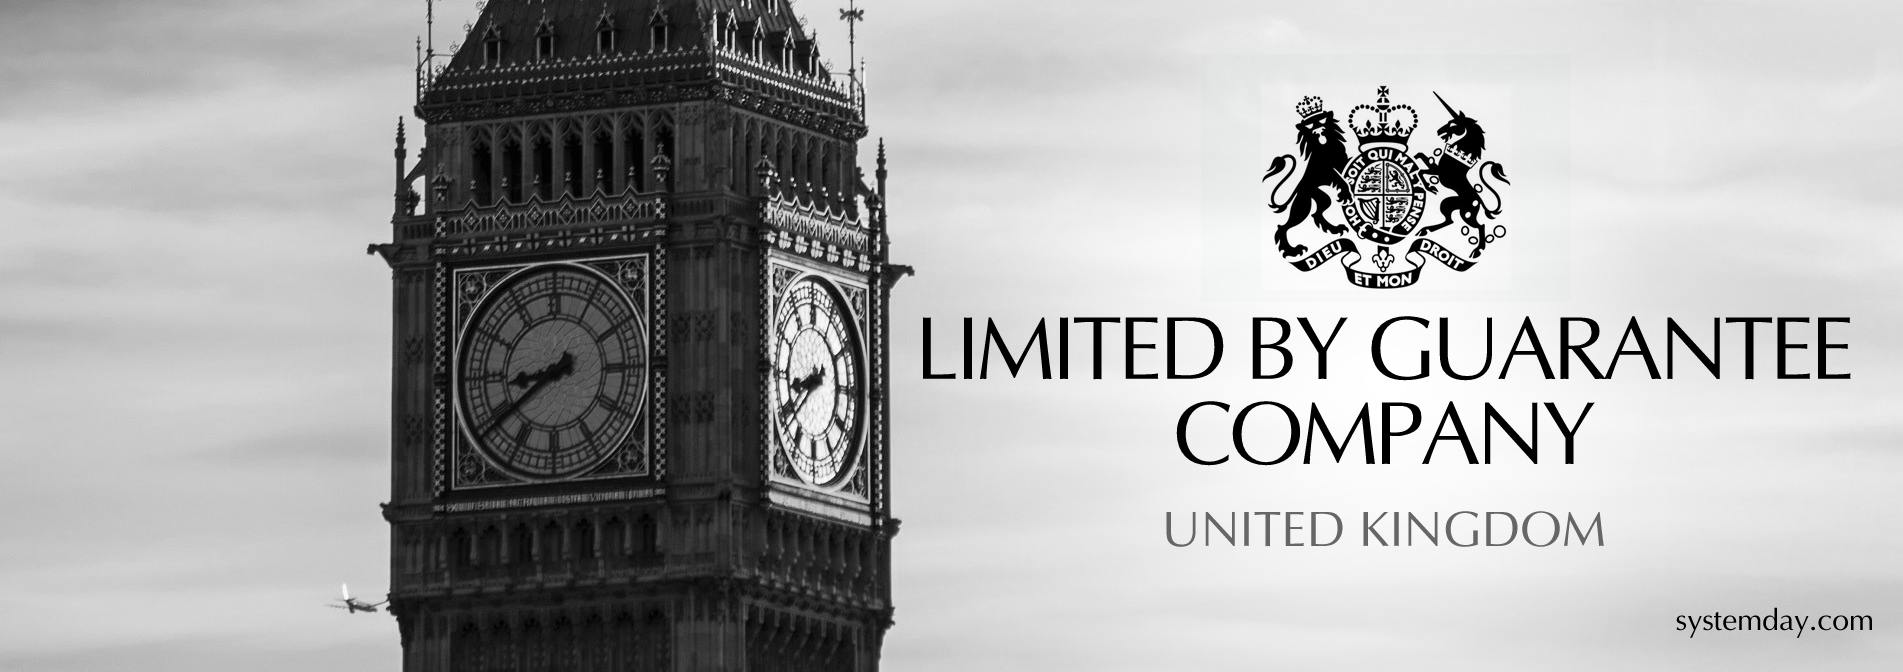 UK Limited by Guarantee Company